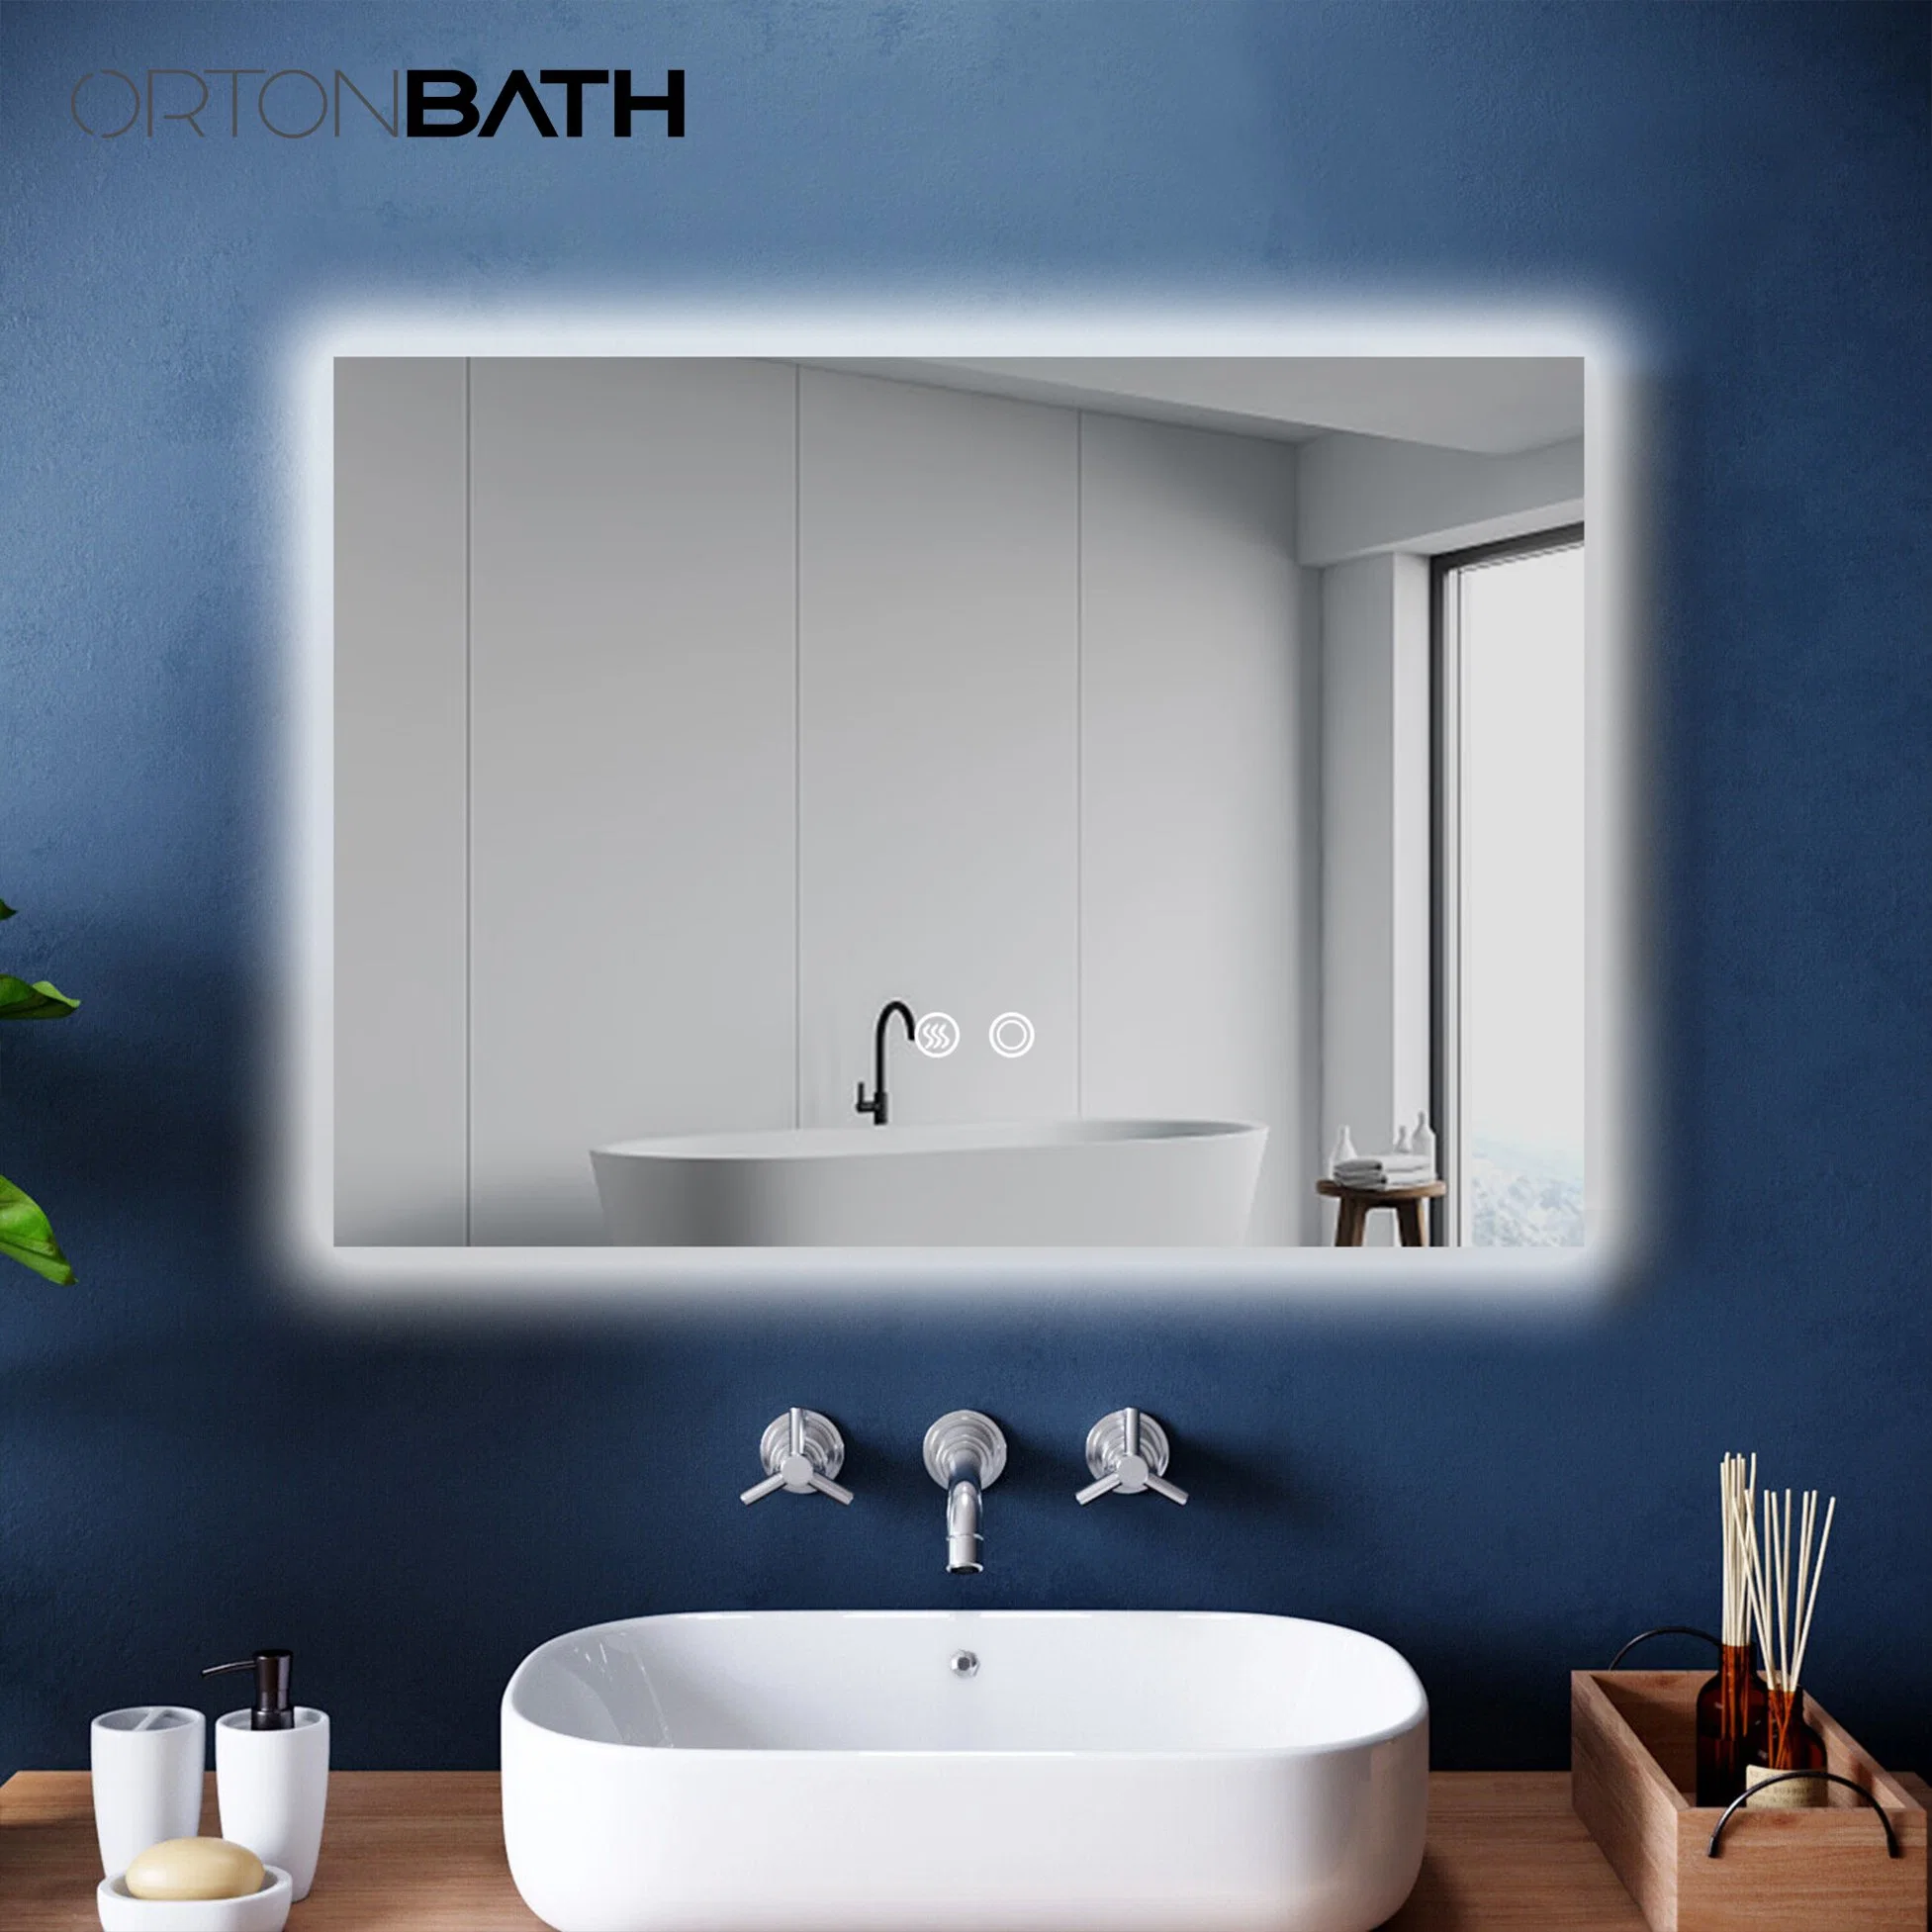 Ortonbath hinterleuchtet 24 Zoll LED-Spiegel Acryl Badezimmer Spiegel mit Beleuchtung Mit Anti-Fog-Beleuchtung, Dimmbarer Spiegel